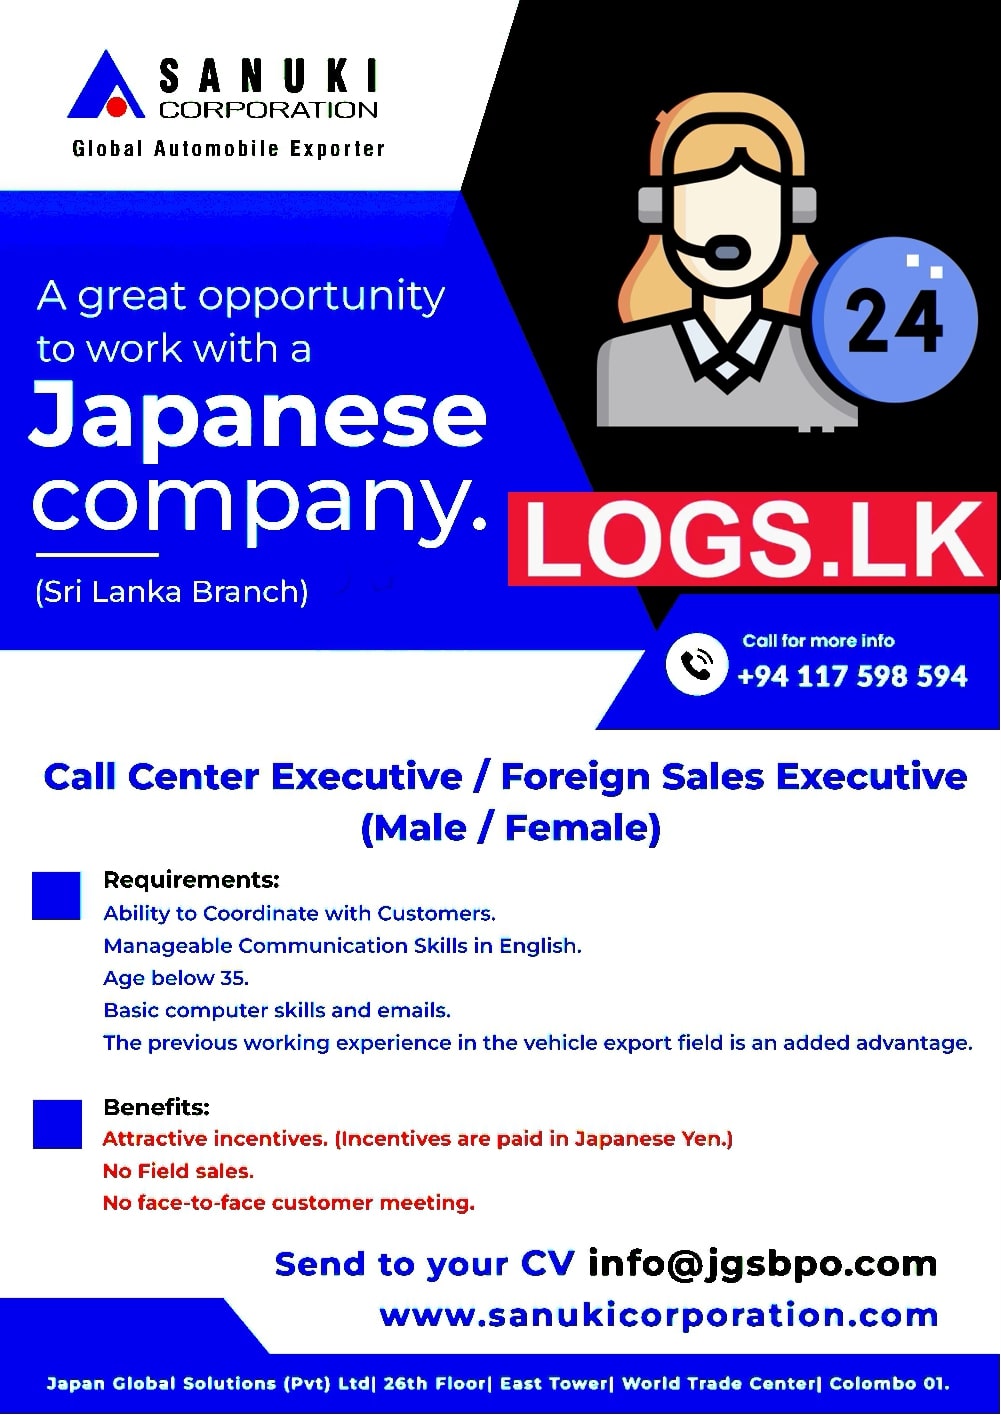 Call Center Executive Job Vacancy in Sanuki Corporation Jobs Vacancies Details, Application Form Download